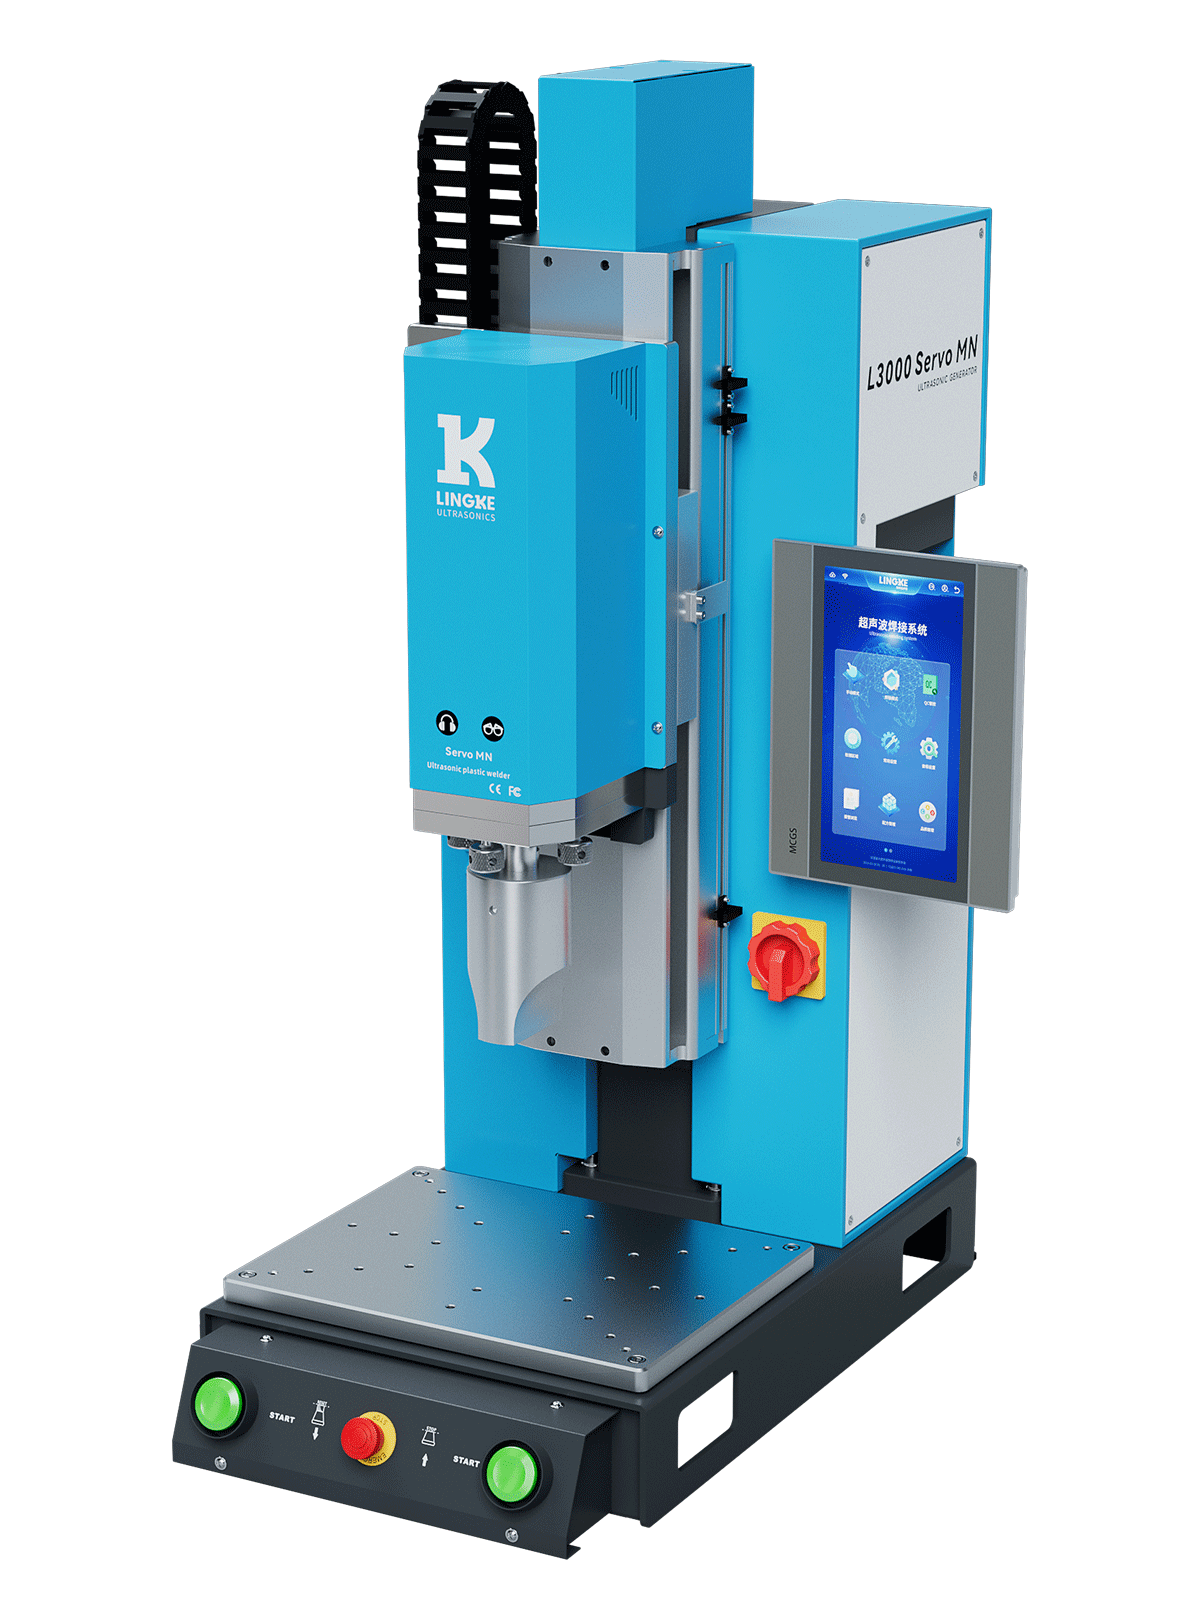 15kHz-2600/3200W L3000 Servo MN 灵科伺服超声波焊接机